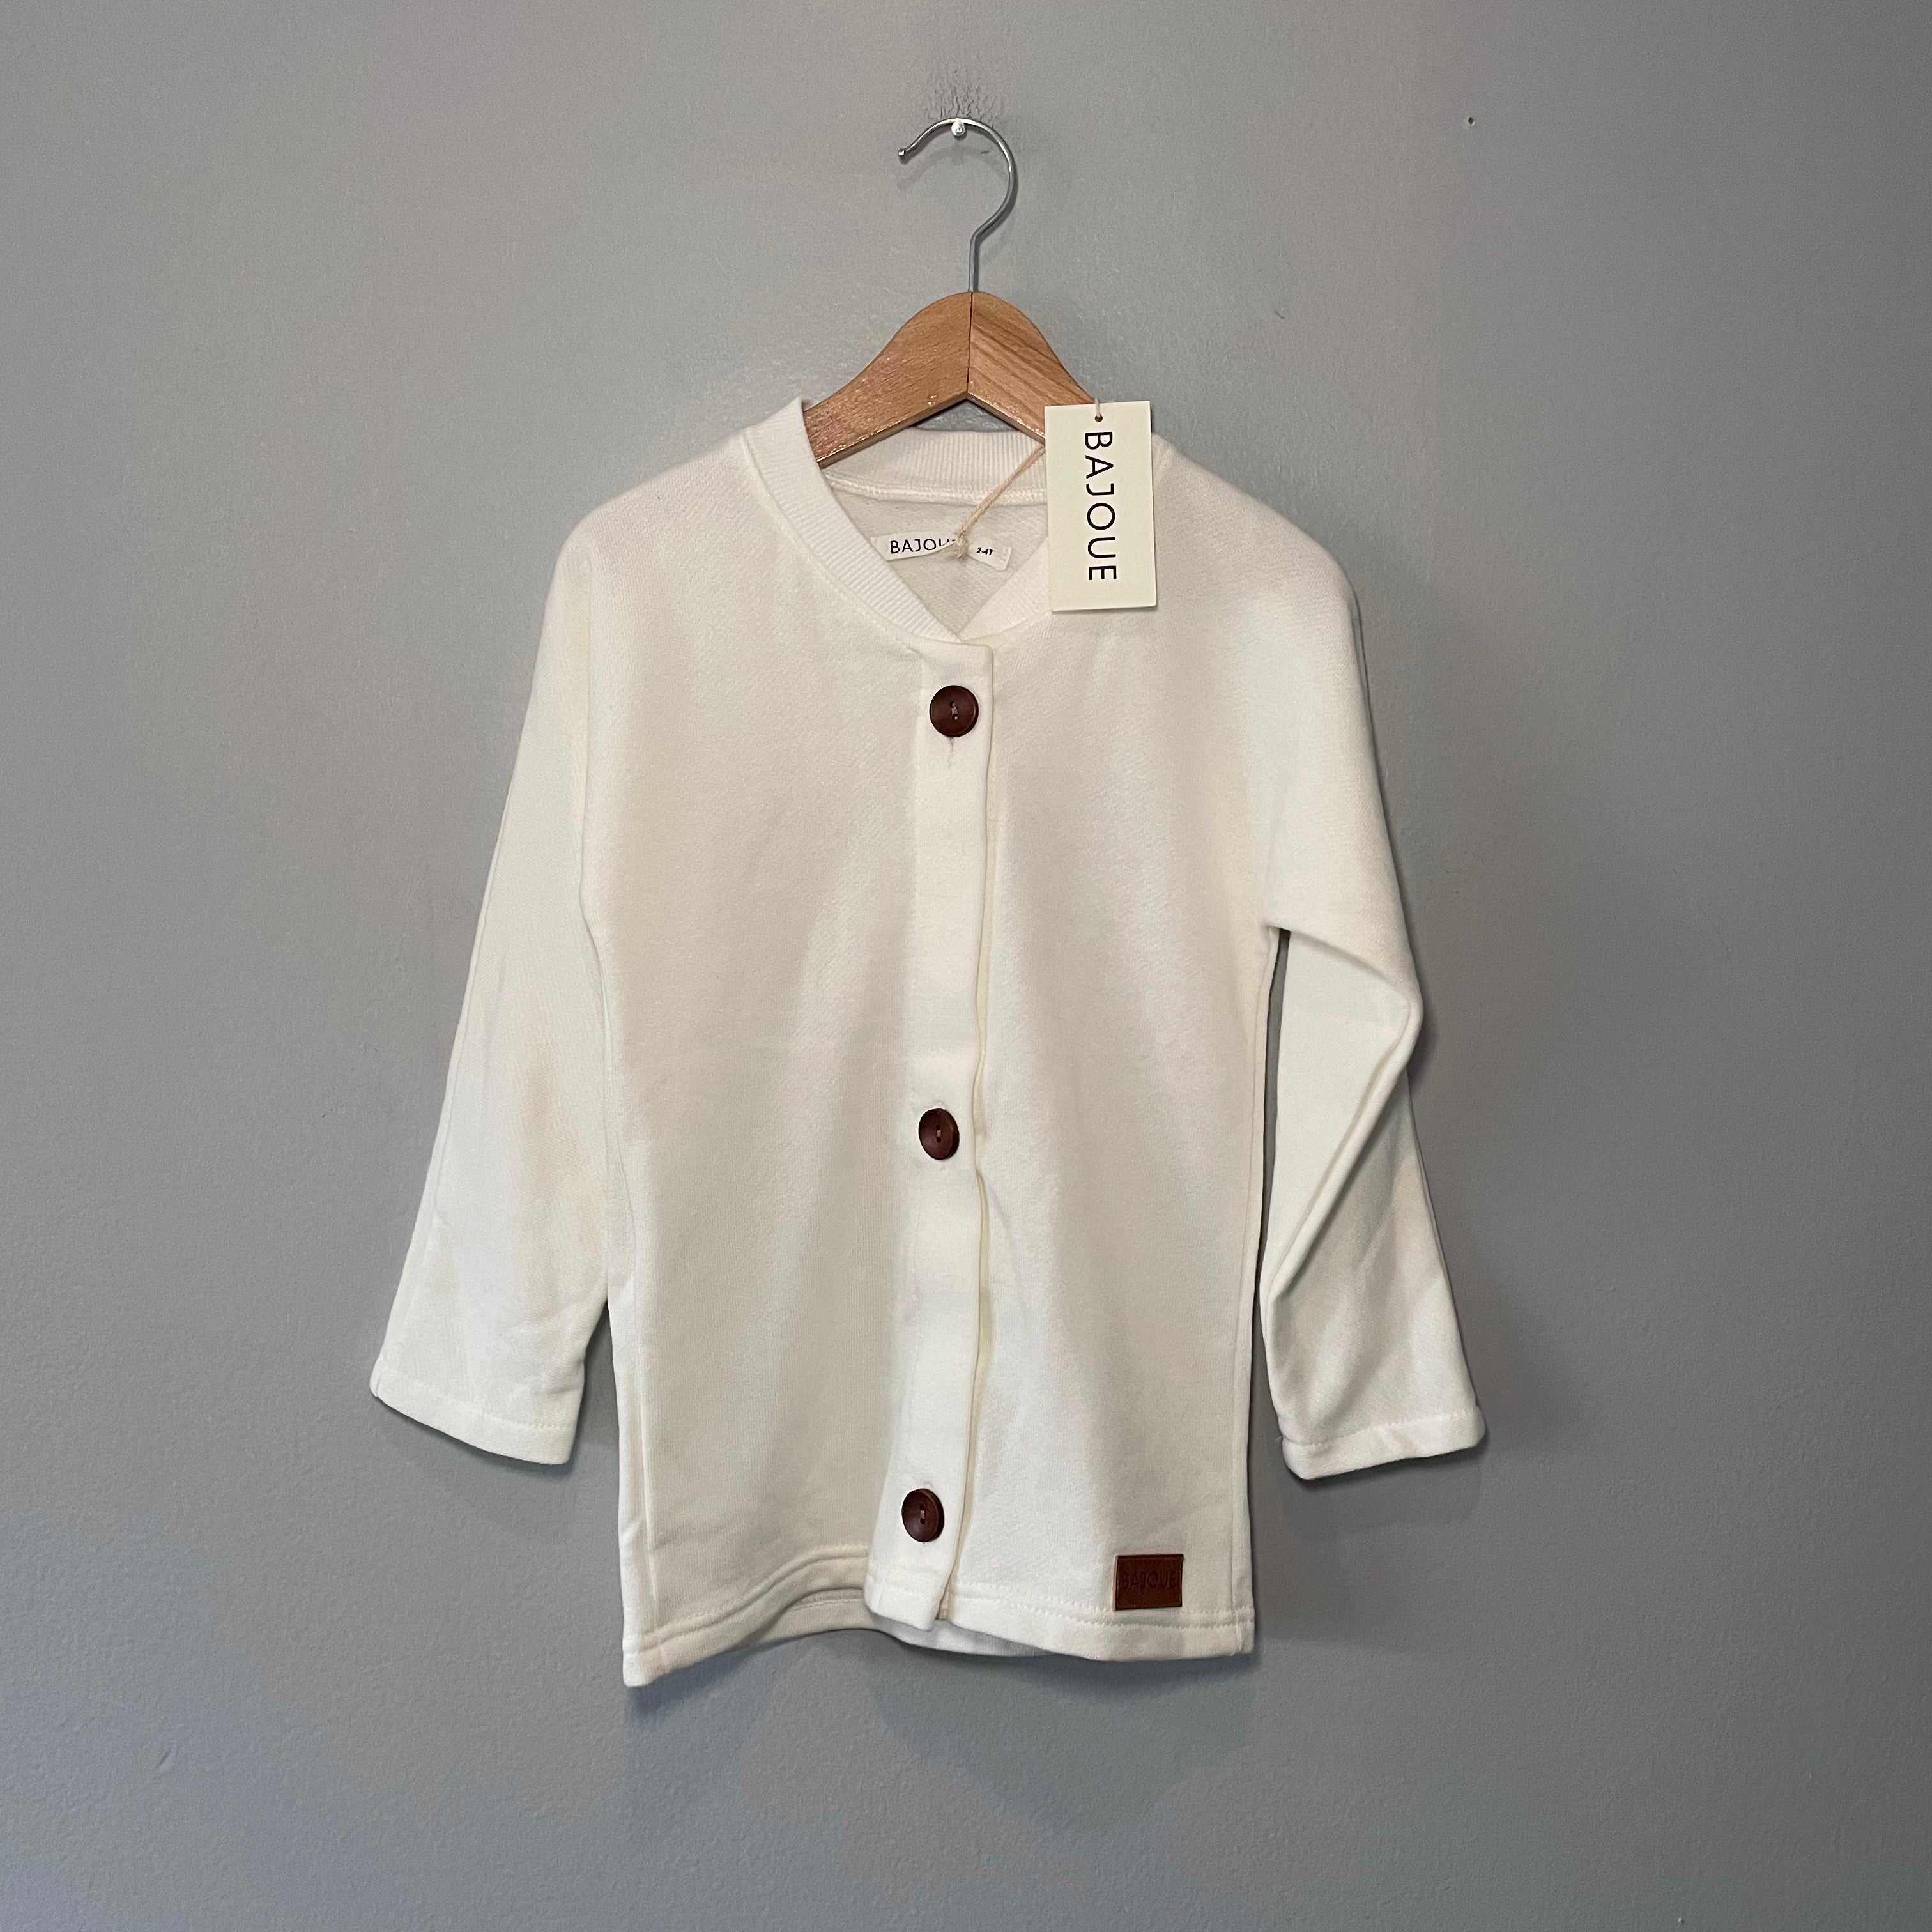 Bajoue / White sweat cardigan / 2-4T - New with tag – tetote kidswear